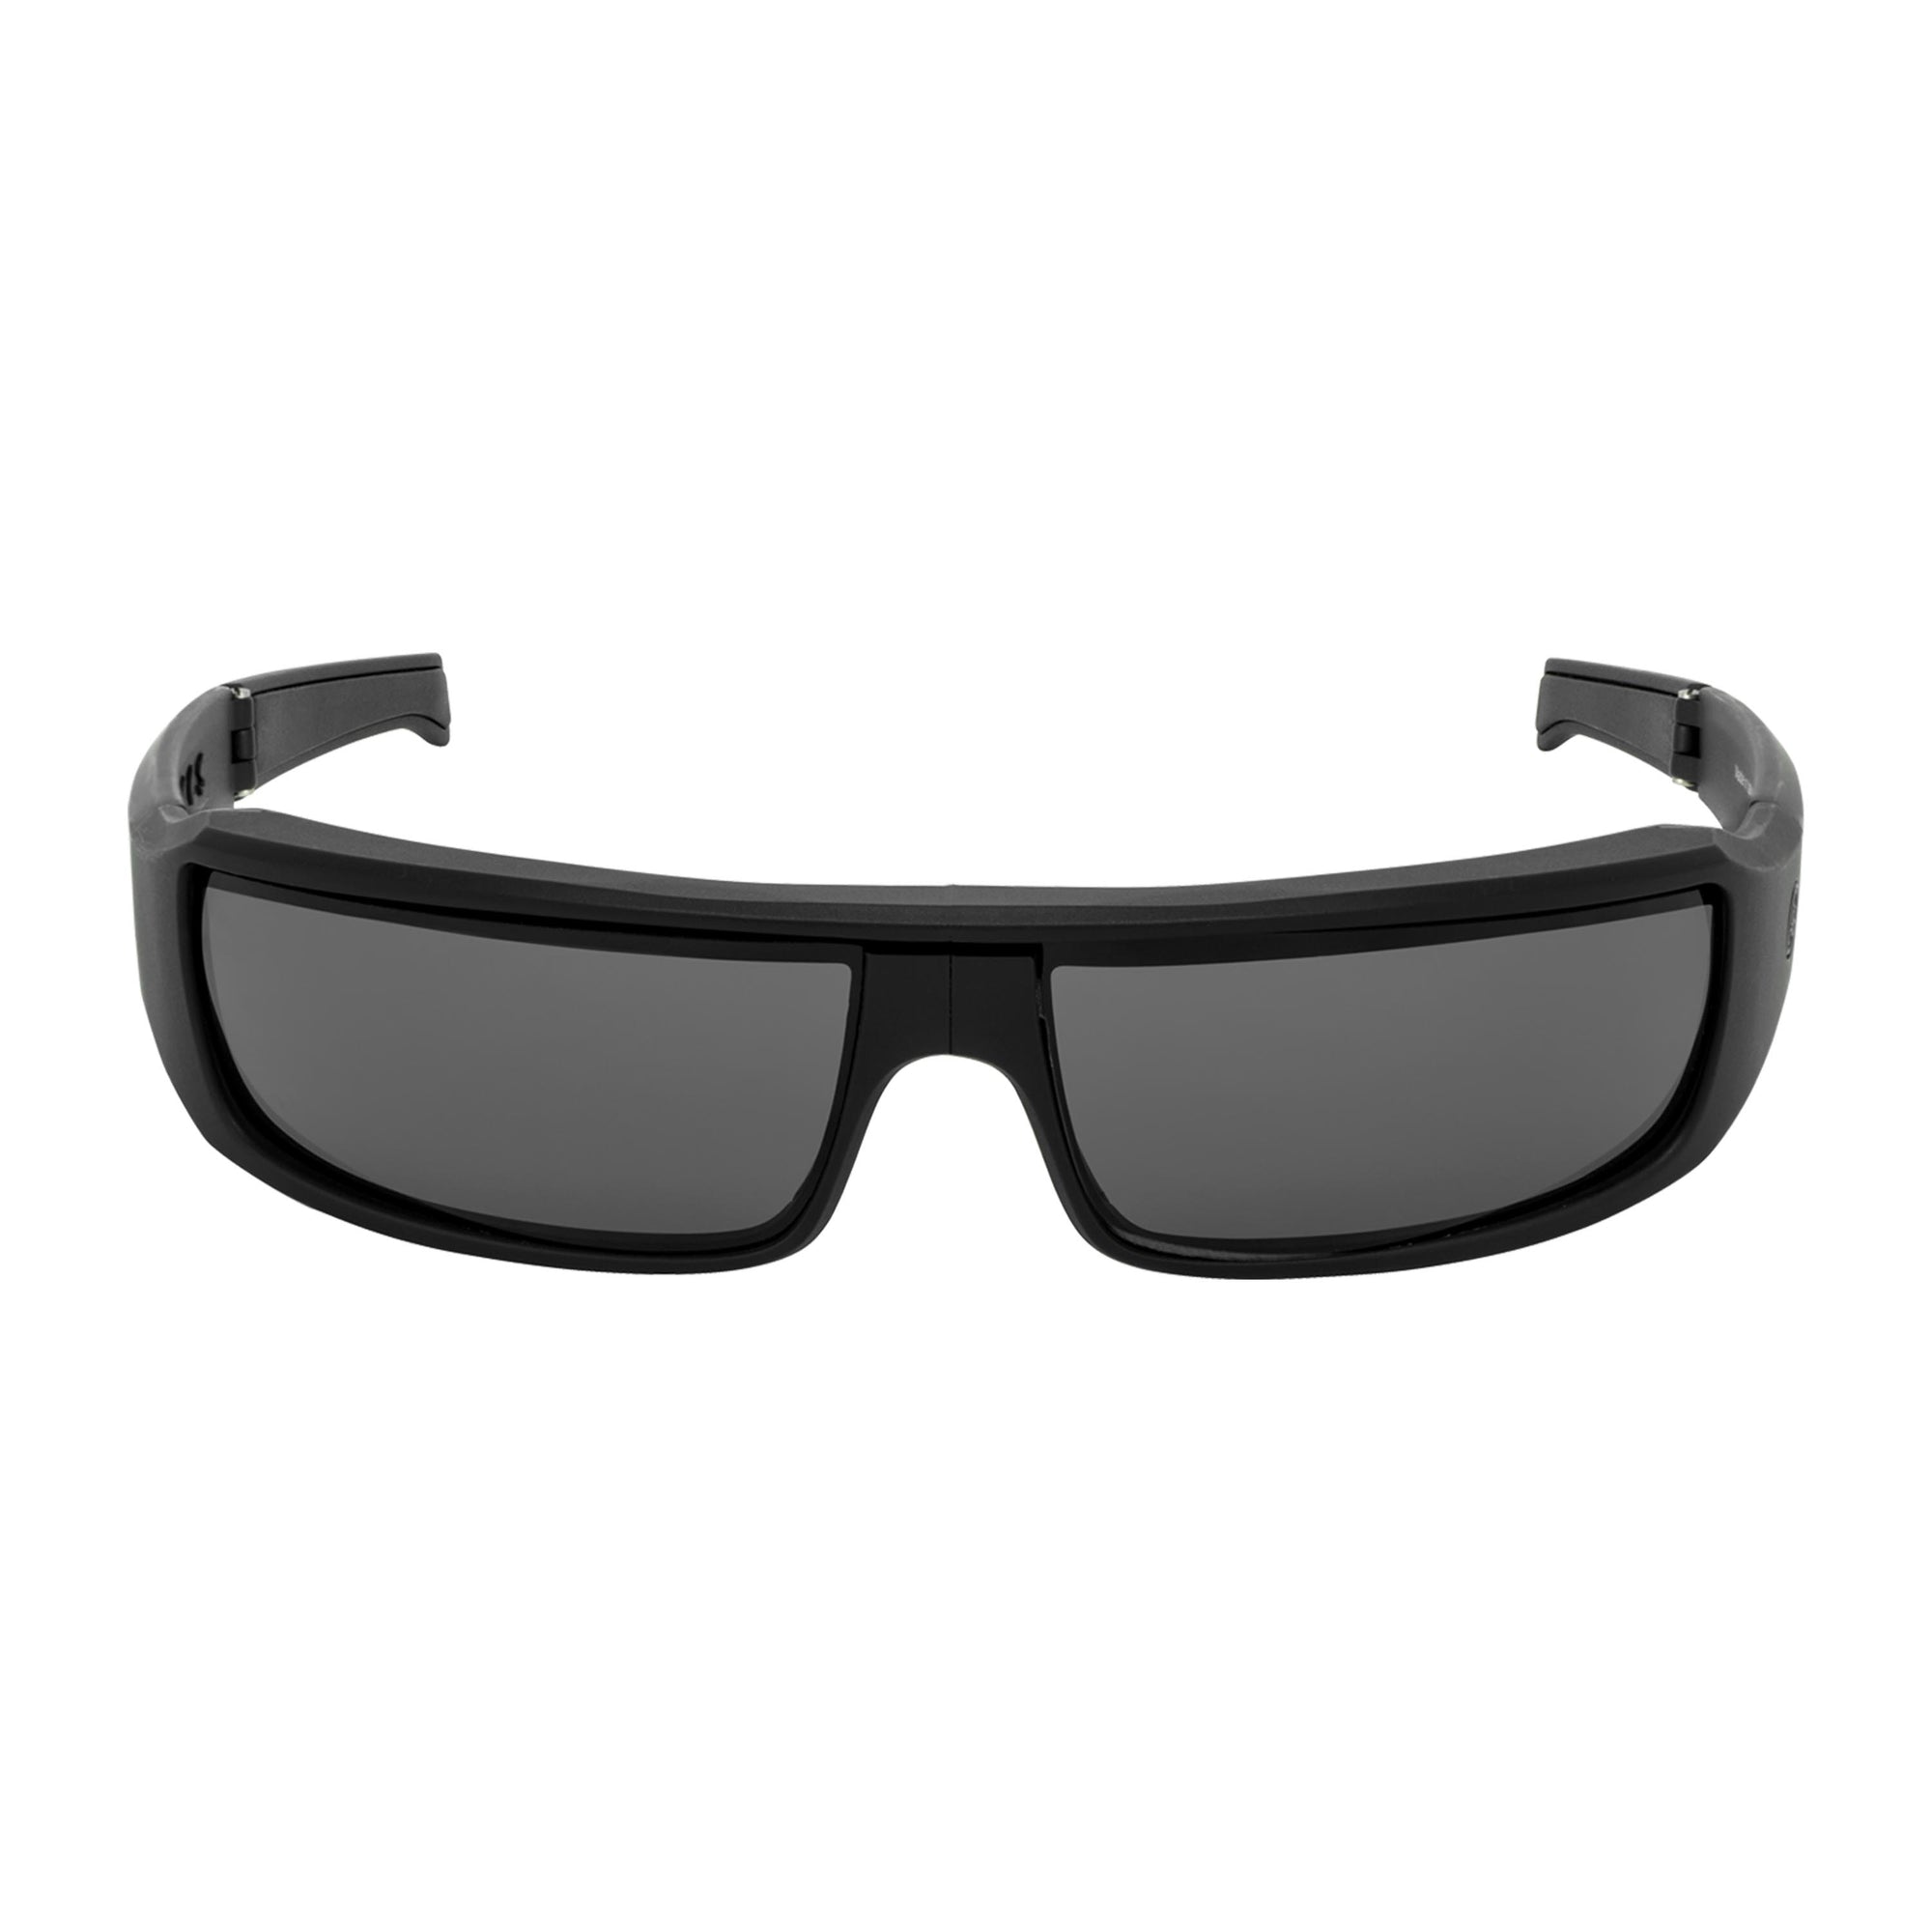 Popticals, Premium Compact Sunglasses, PopSign, 010020-BMGP, Polarized Sunglasses, Matte Black Frame, Gray Lenses, Glam View